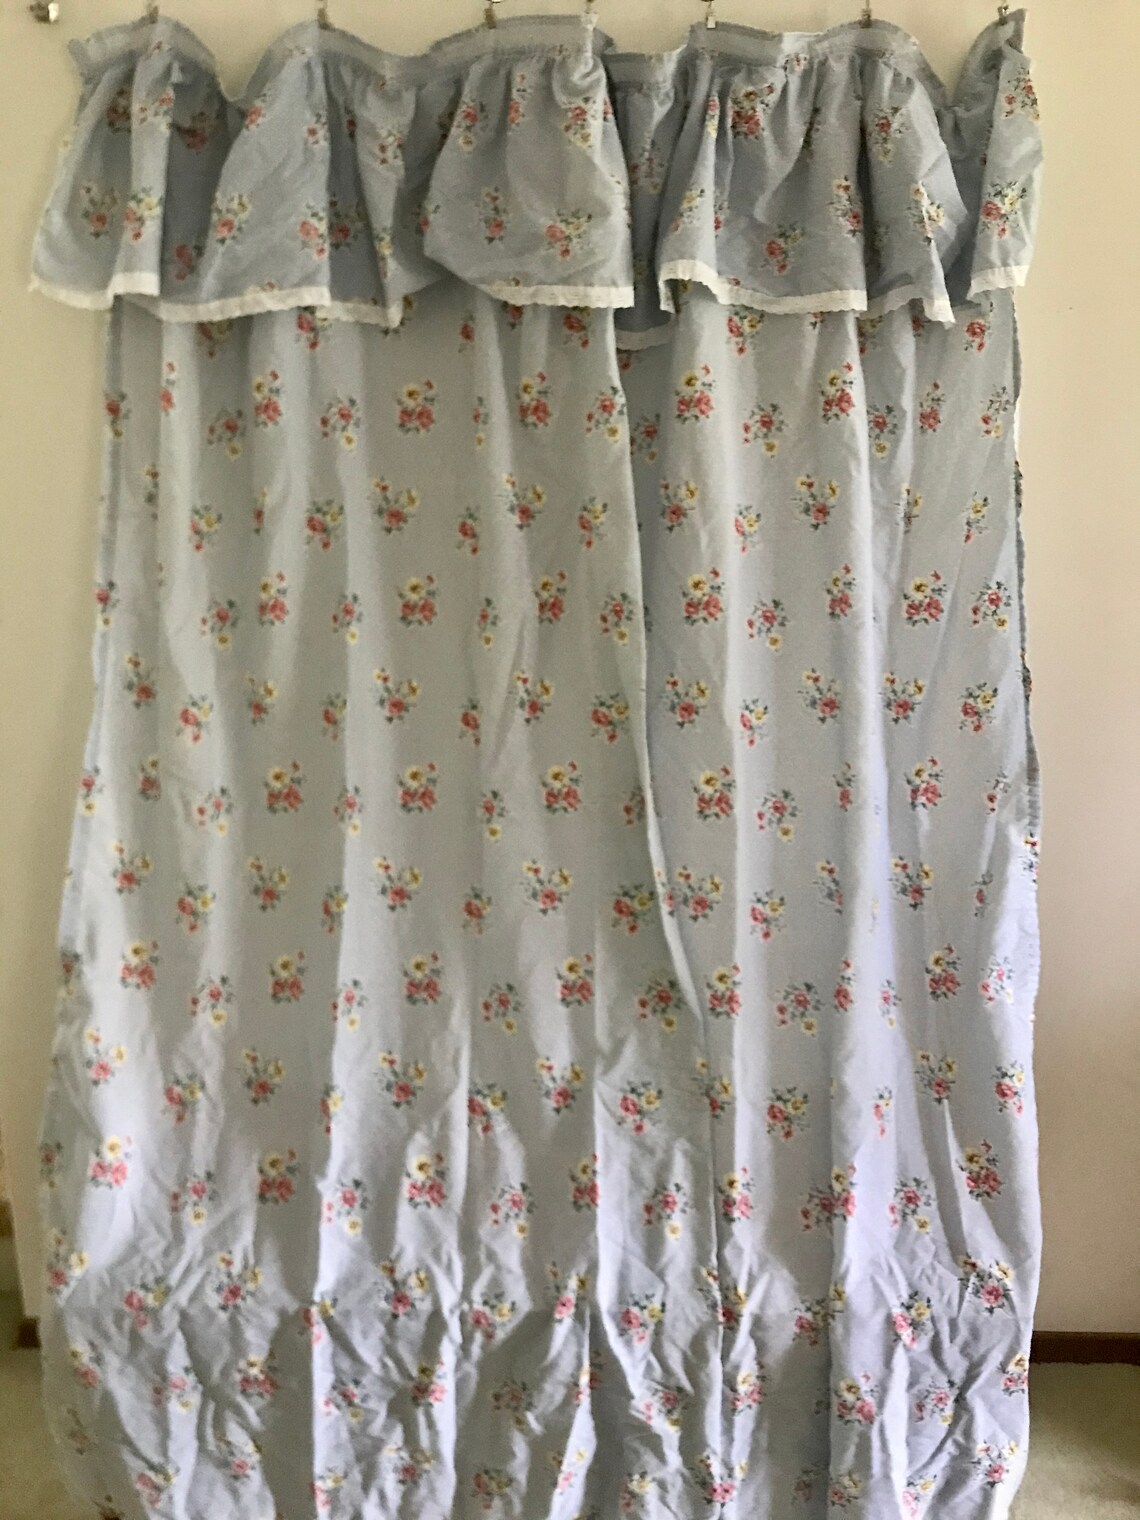 Beautiful Ruffled Floral Shower Curtain Martha Stewart Home | Etsy